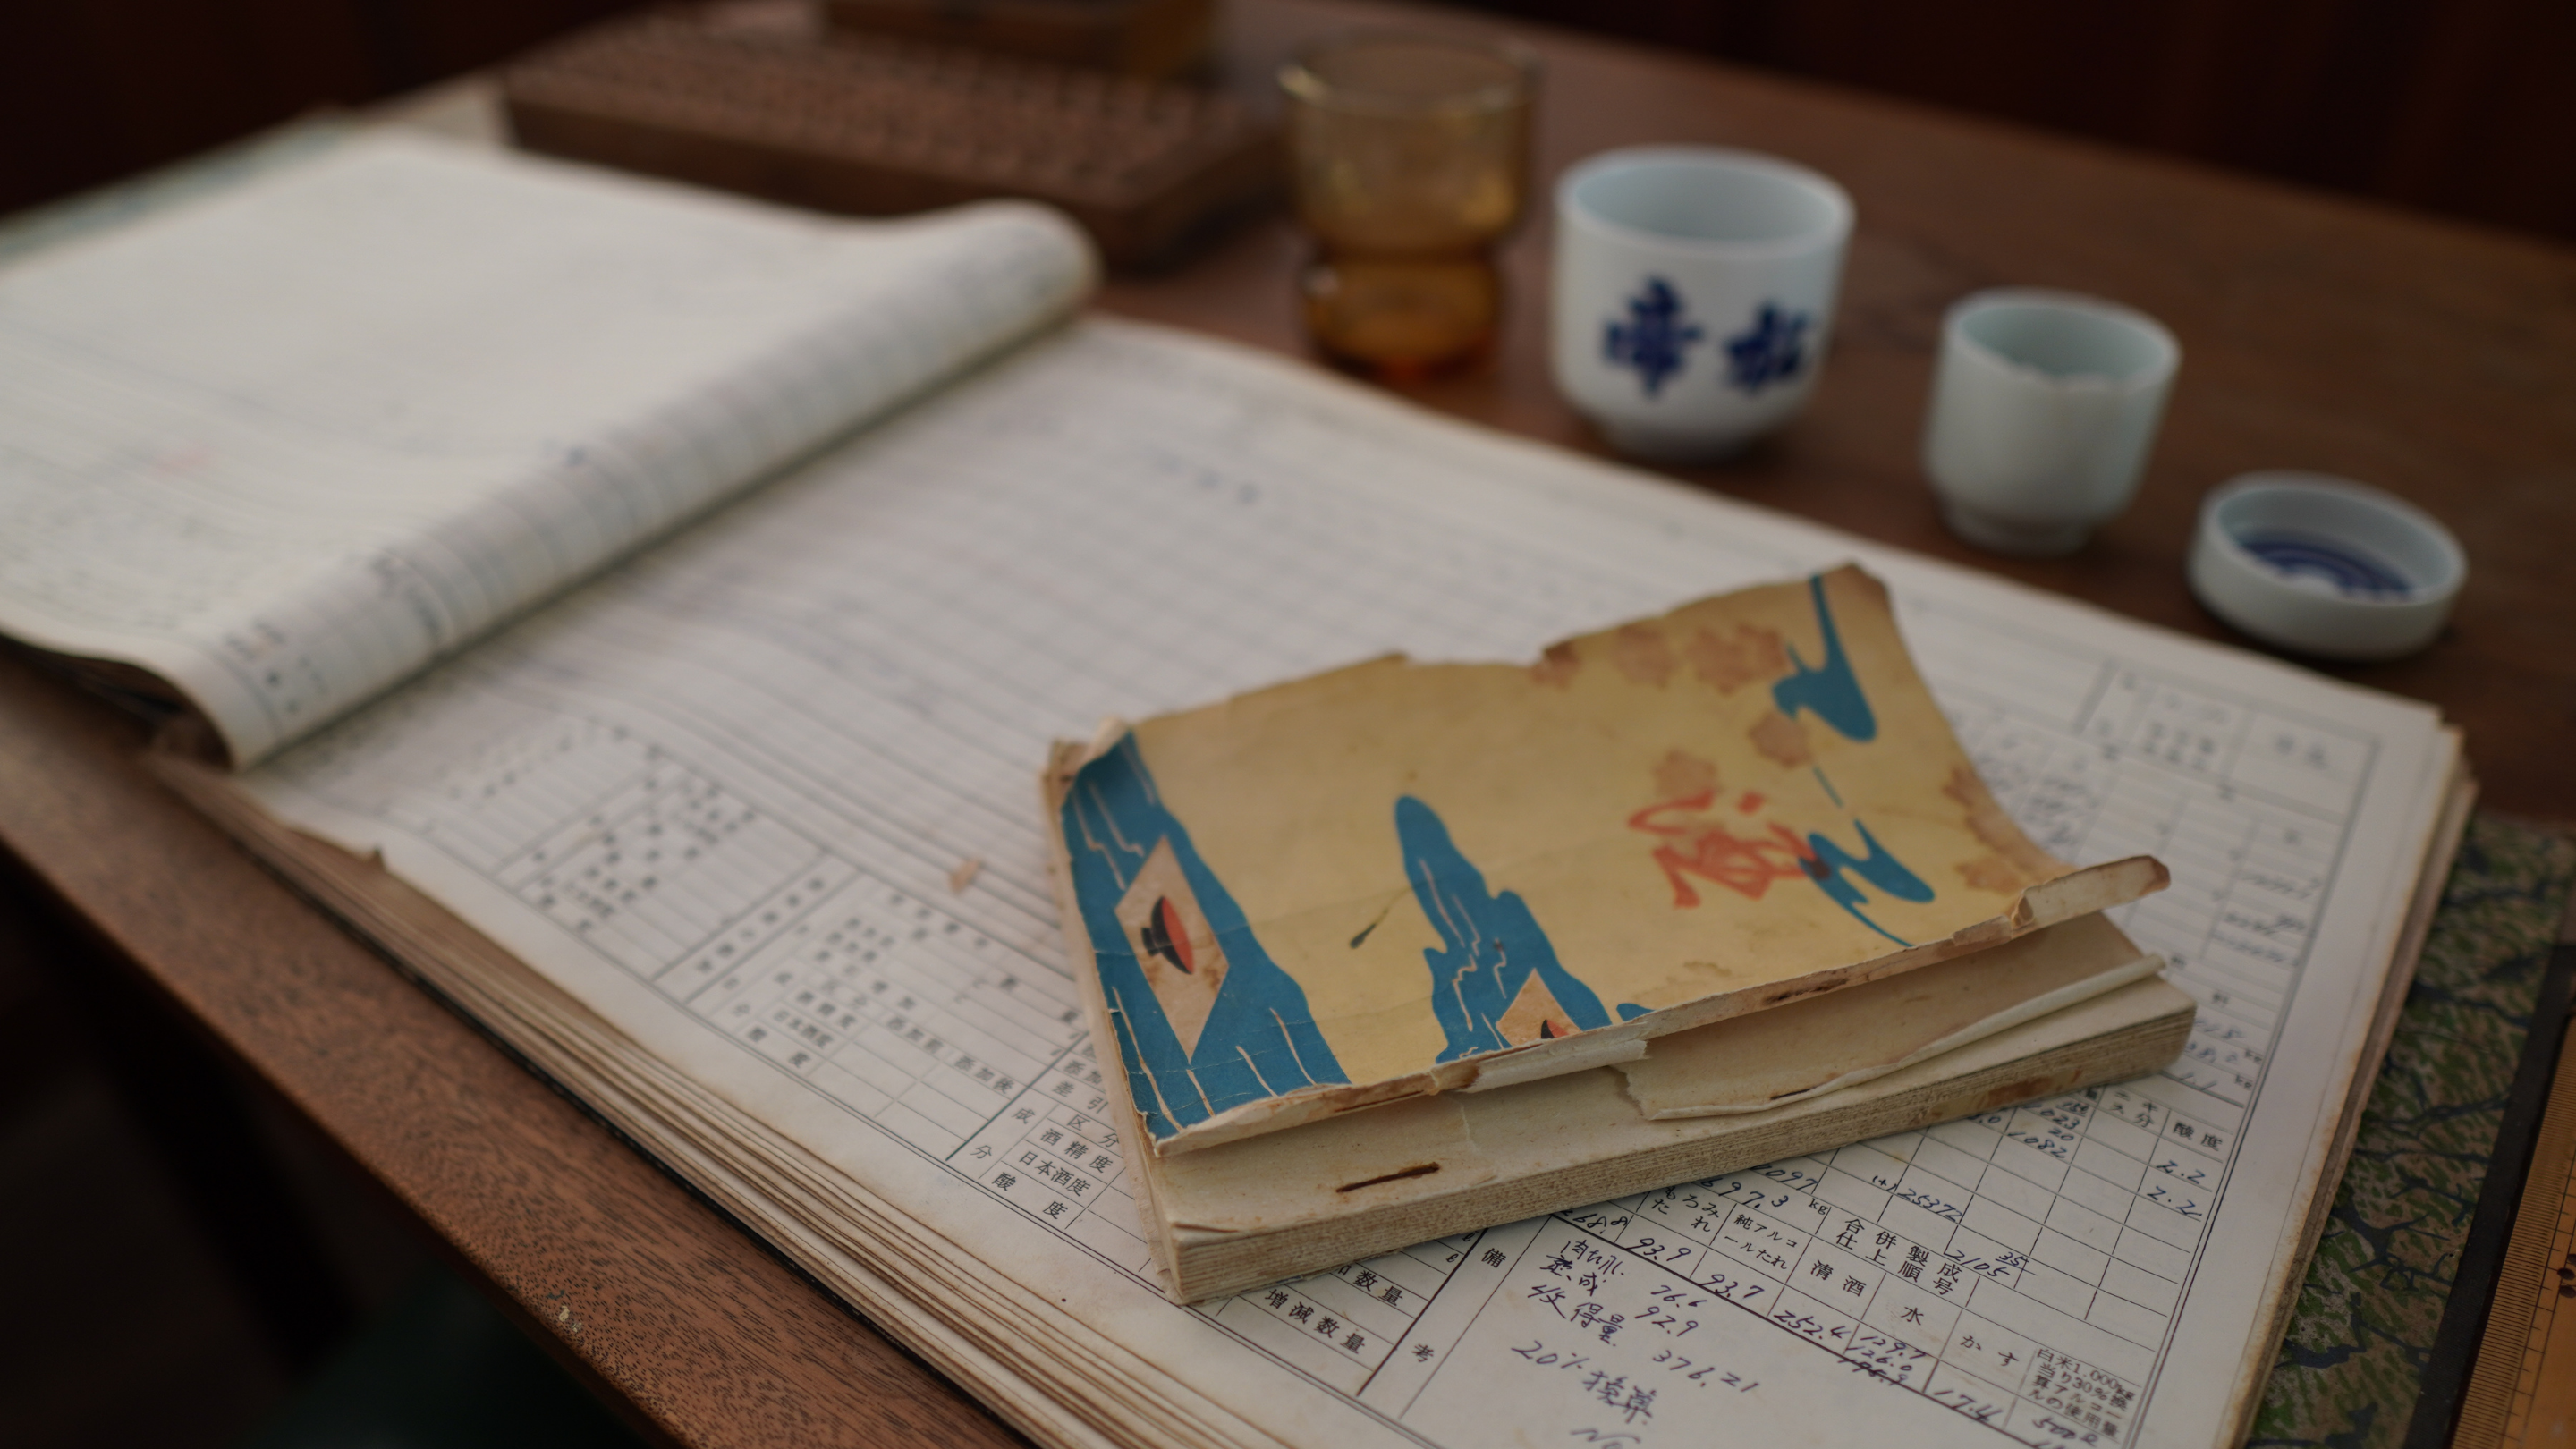 Sake brewery log book for taking notes of the sake production